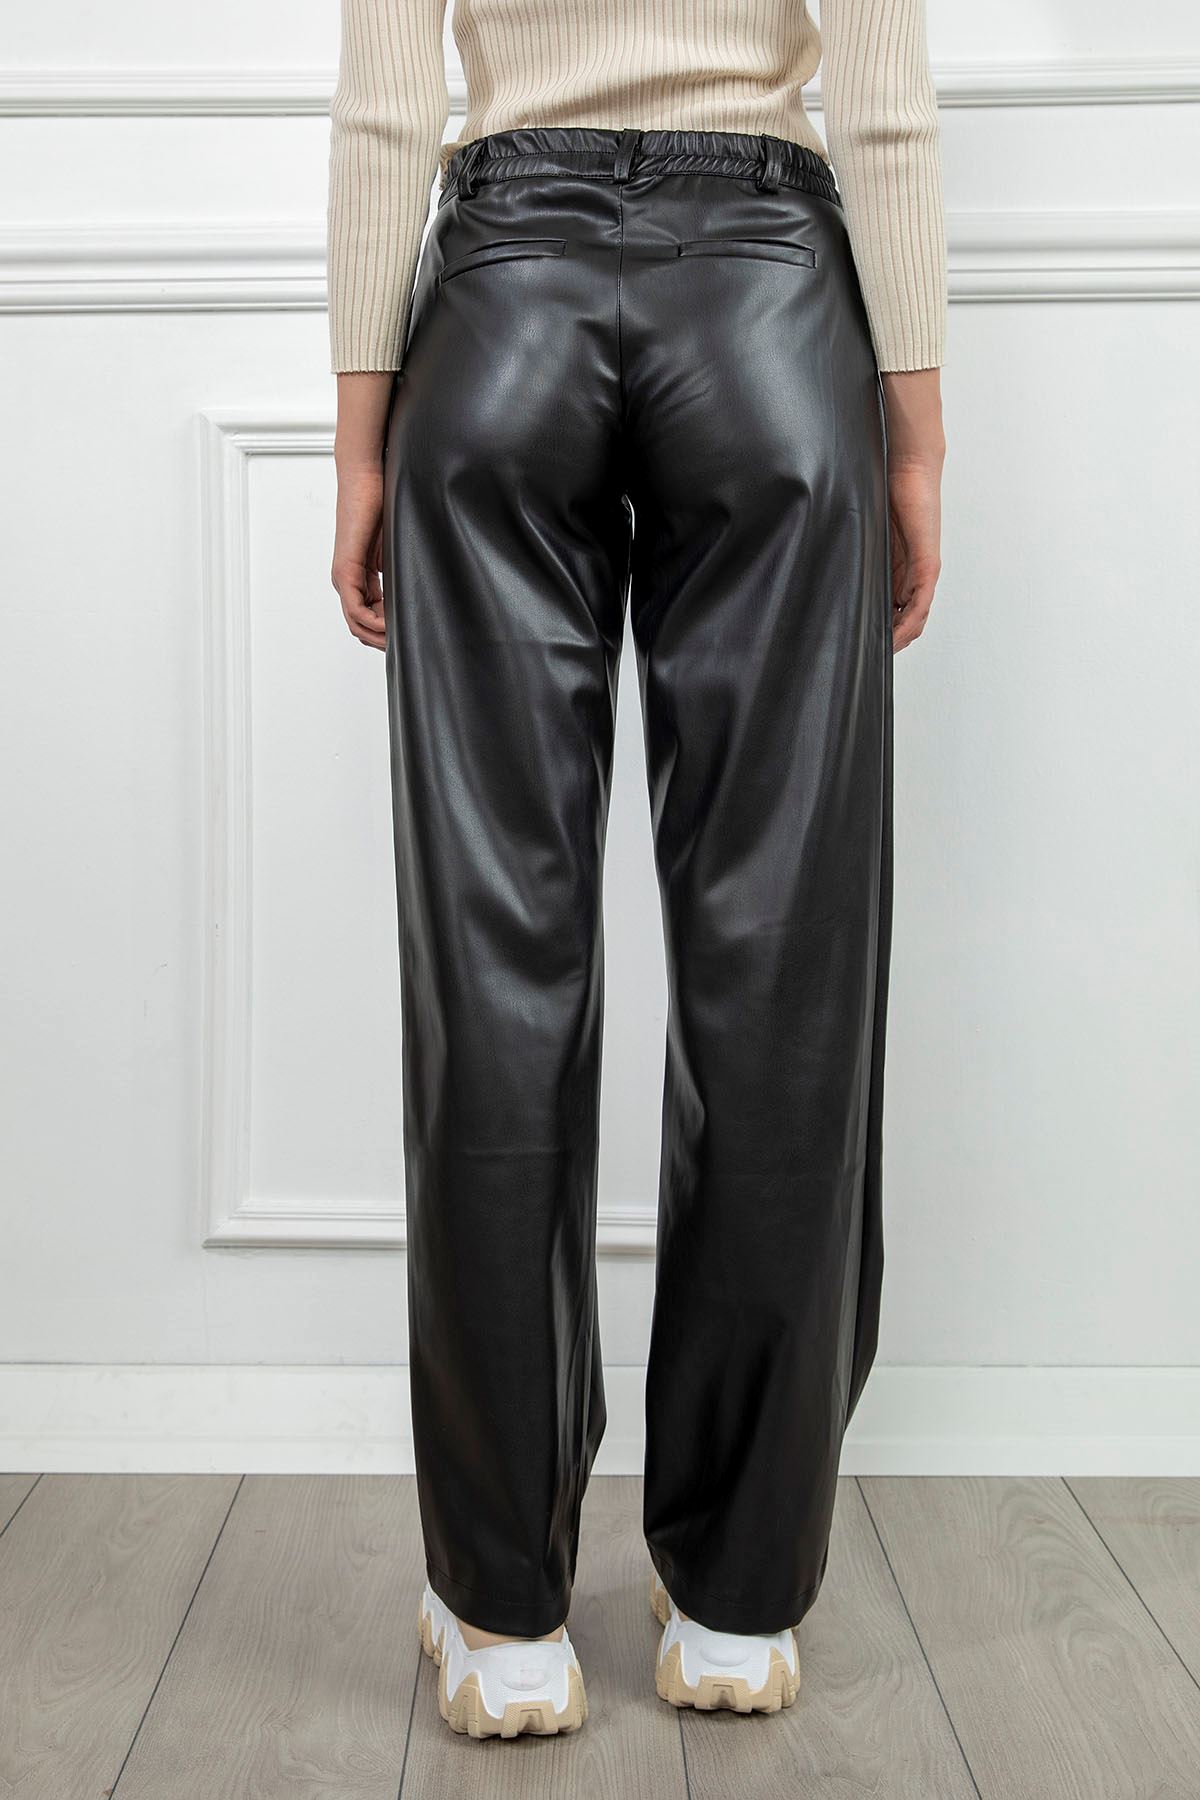 21K127-001-01 Leather Trousers Palazzo-Black - Black